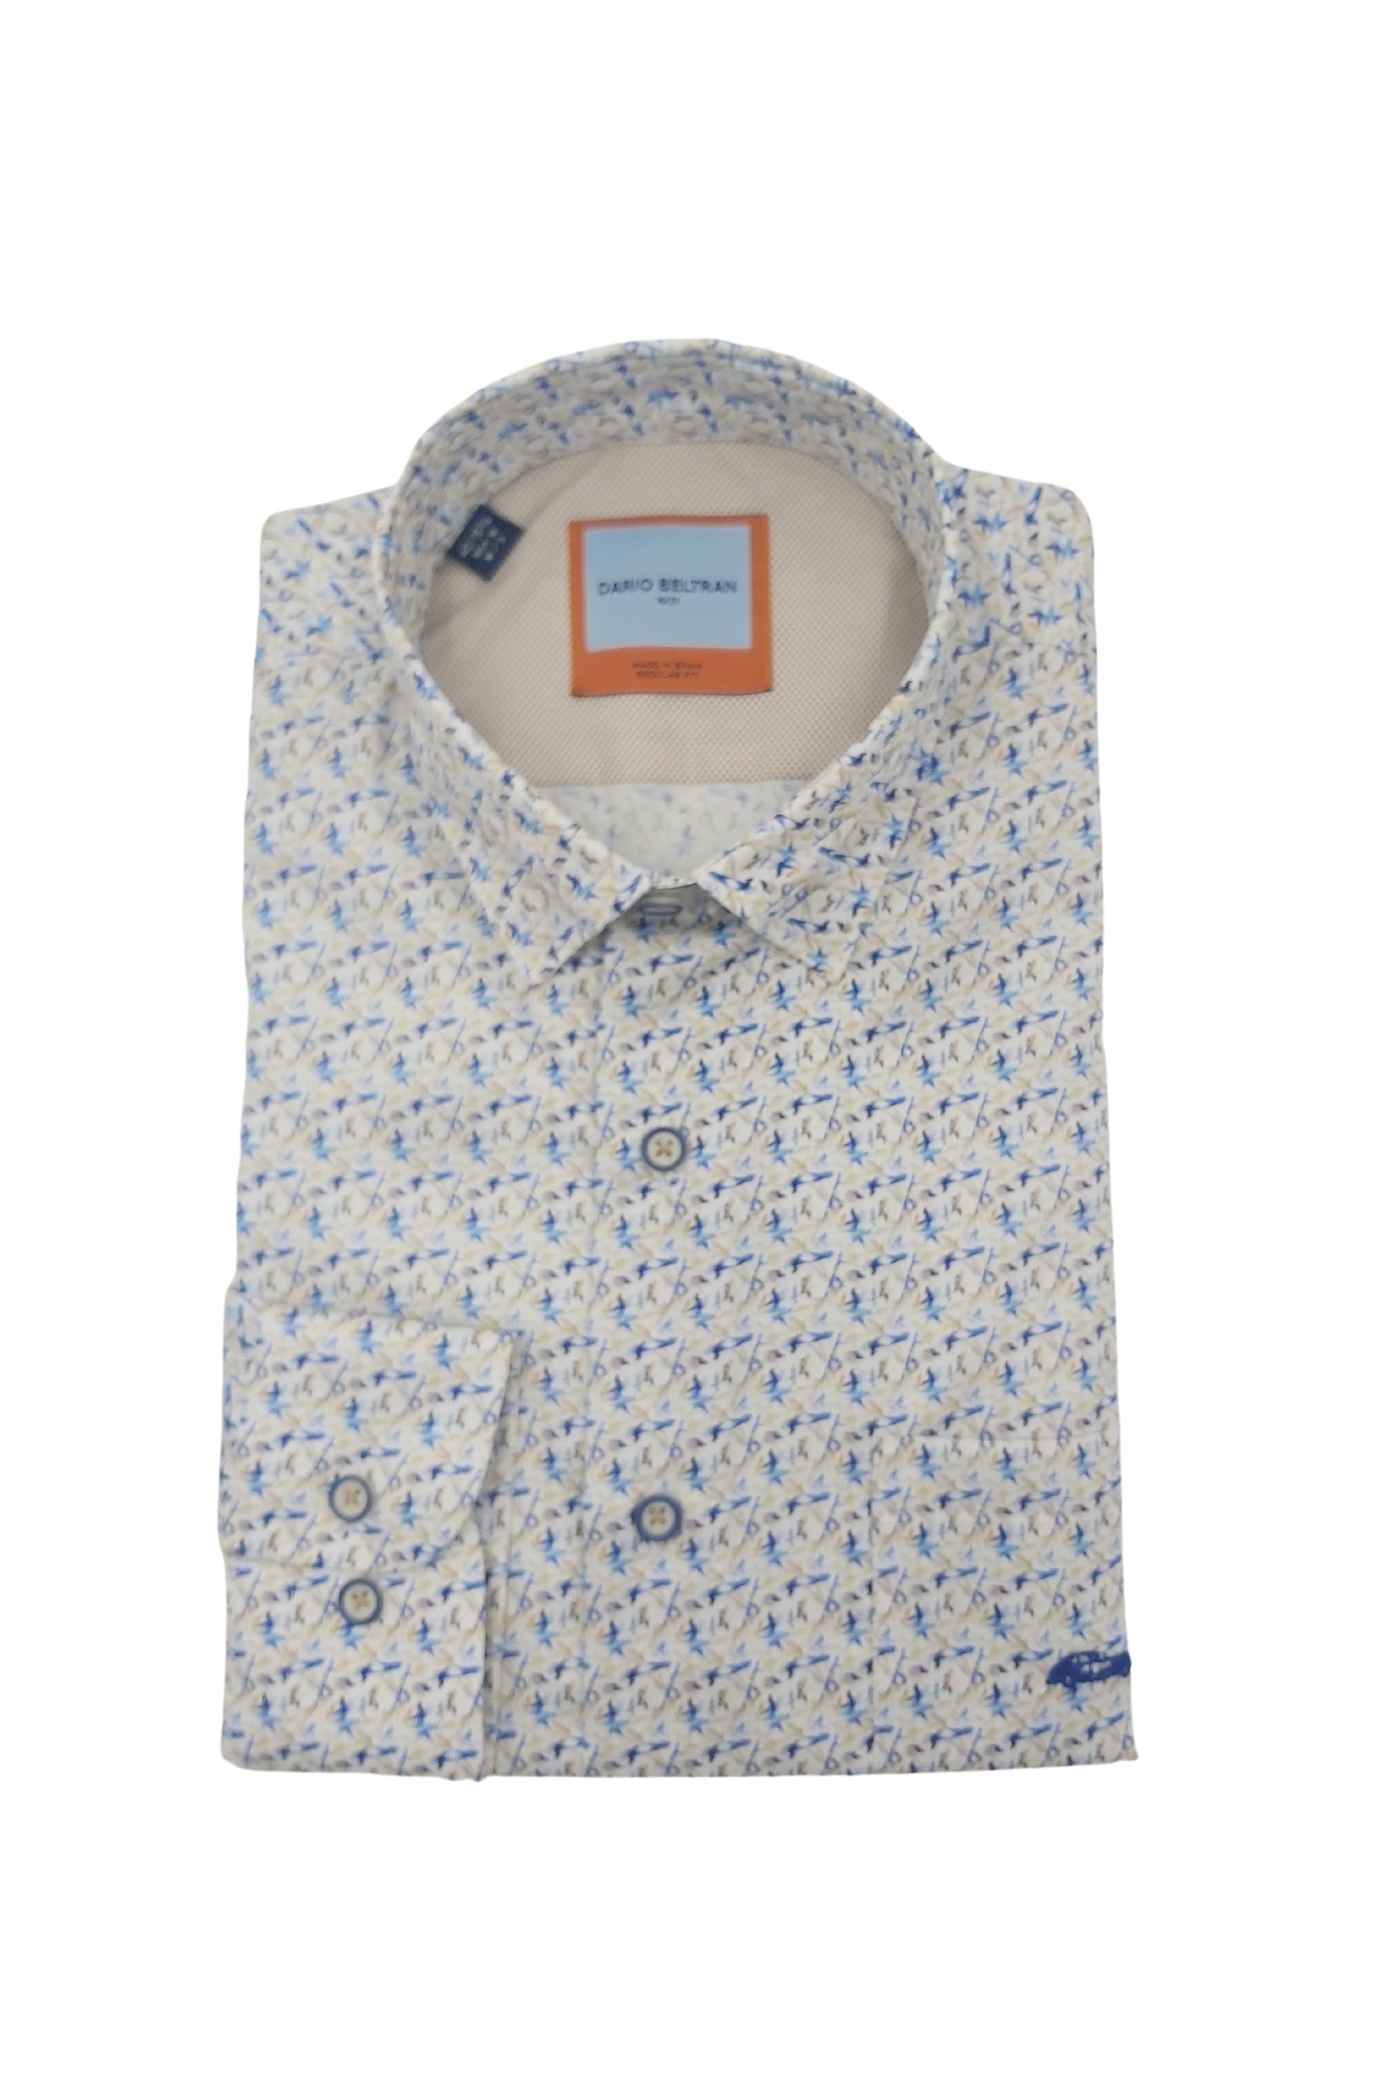 Men's Bellvis White/Blue/Gold Pattern Shirt-Front View